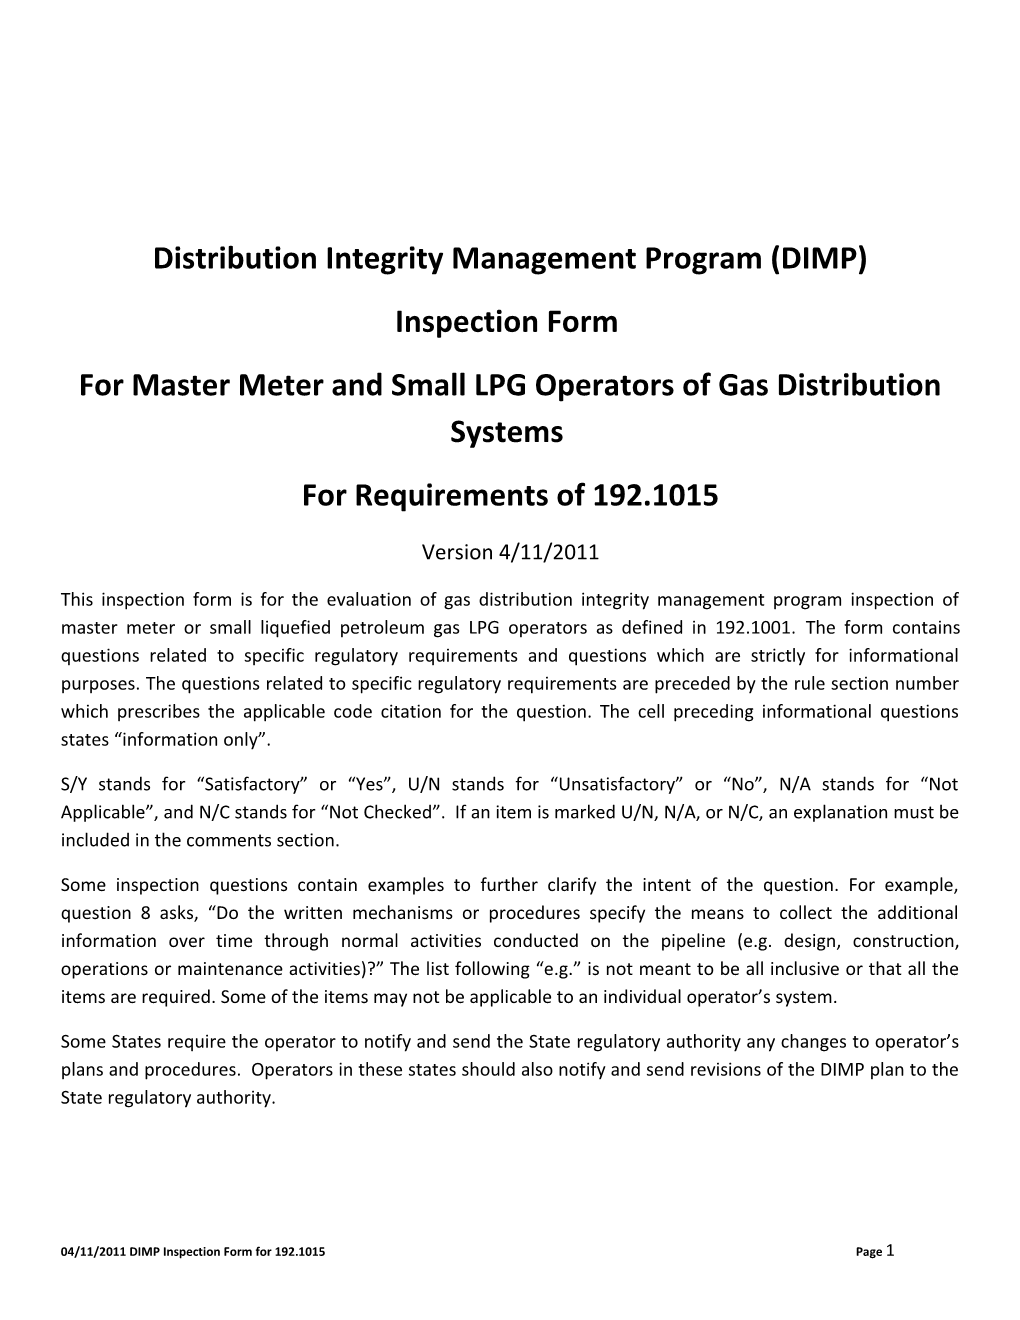 DIMP Inspection Form for 192.1015 Operators